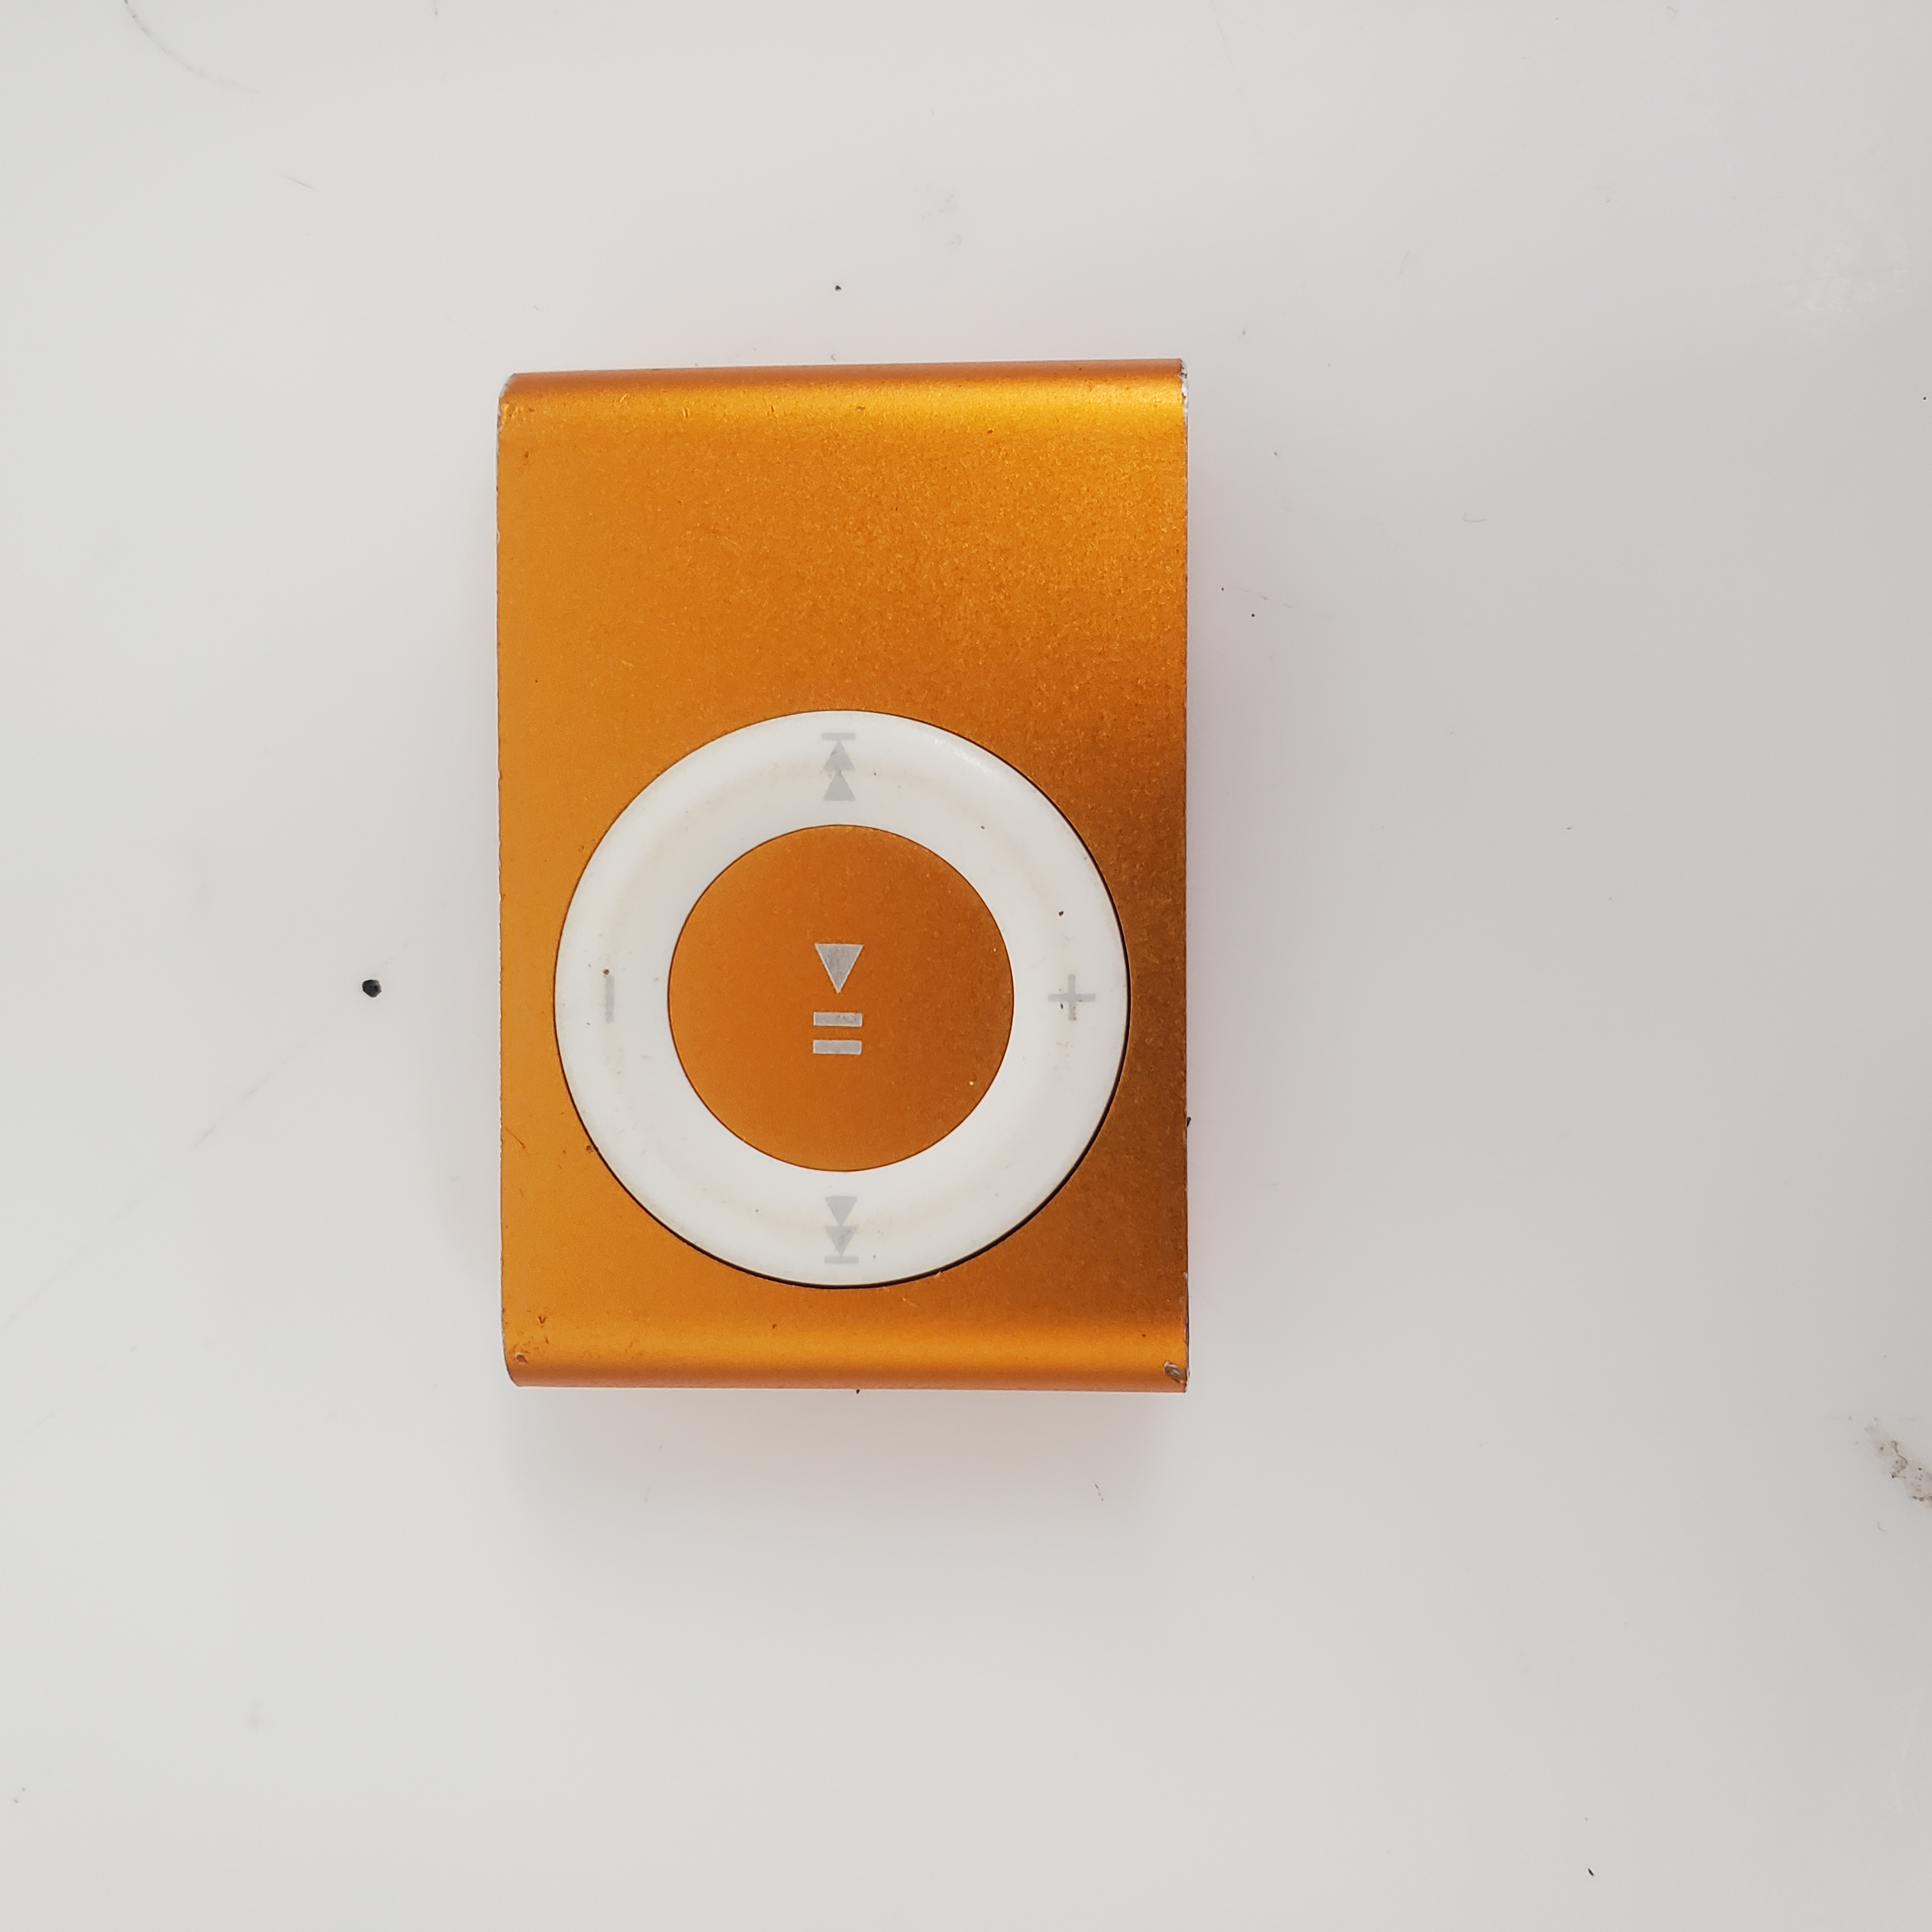 Seraph Fiasko Kalksten Buy the Apple A1373 iPod Shuffle 4th Generation 2GB MP3 Player in Orange |  GoodwillFinds